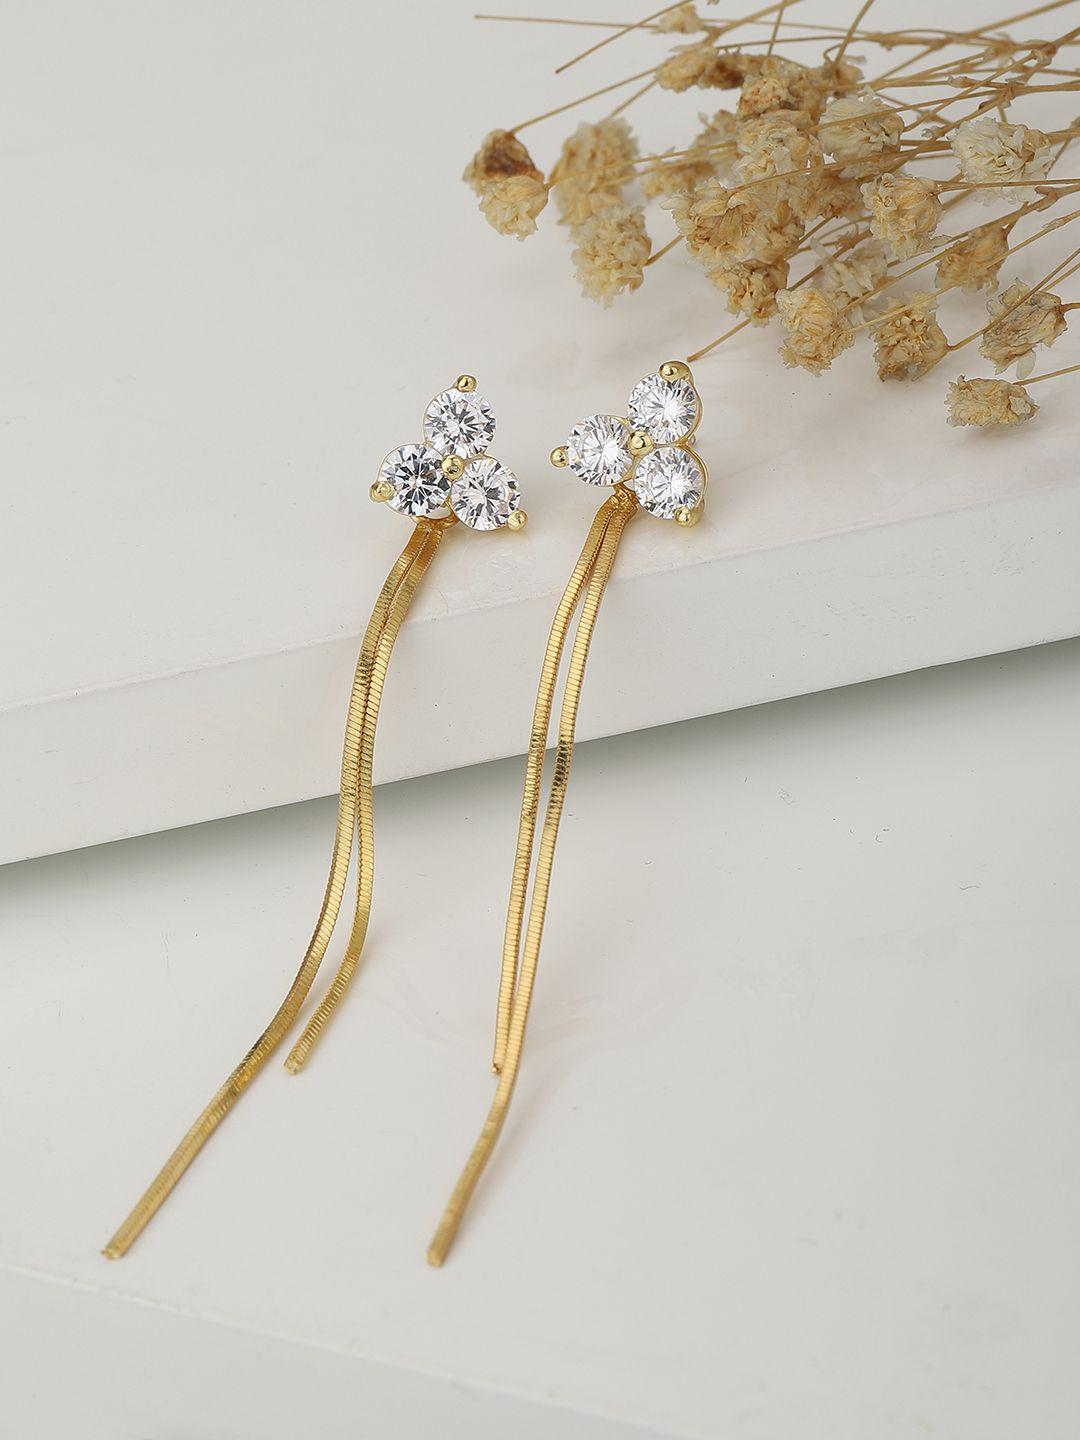 carlton london gold-toned floral drop earrings